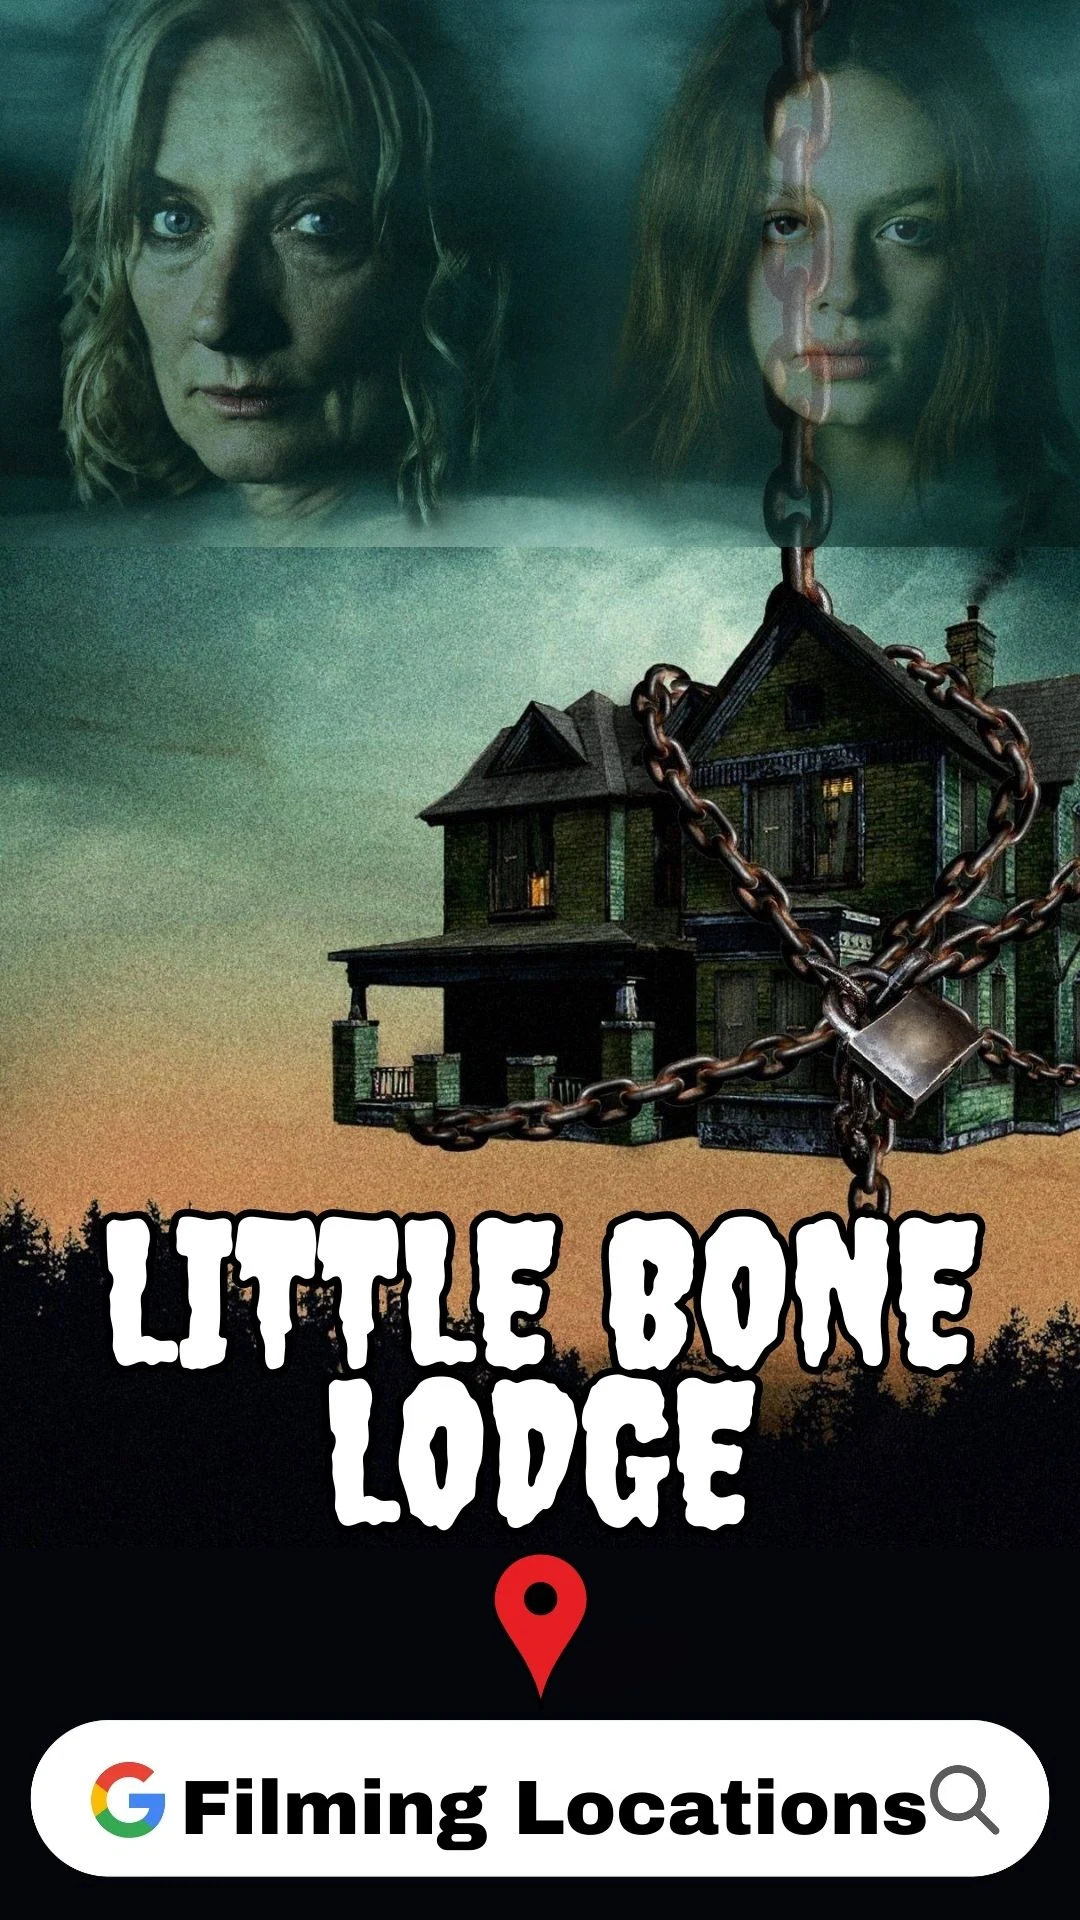 Little Bone Lodge Filming Locations